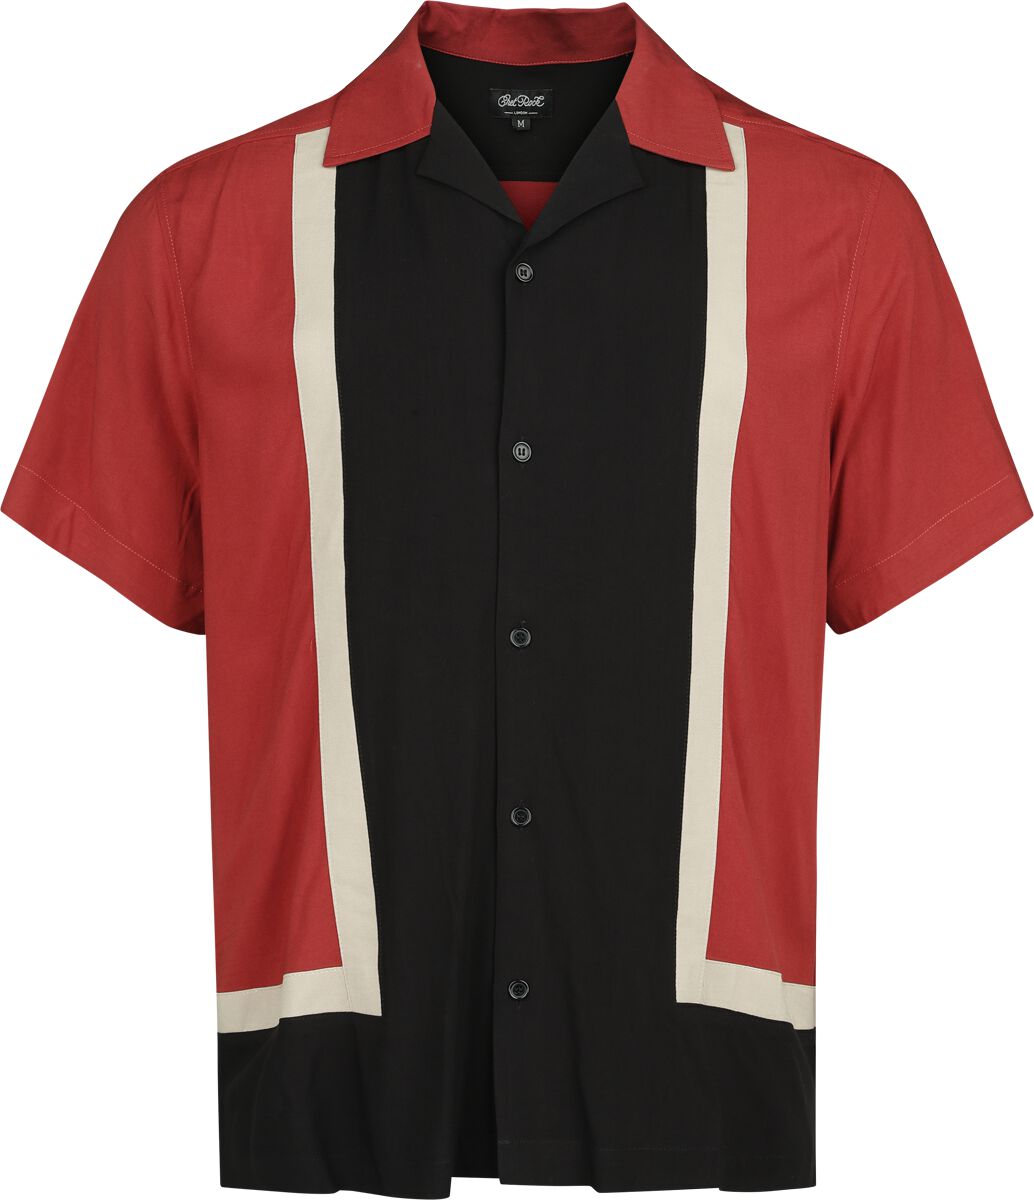 Chet Rock Walter Bowling Shirt Kurzarmhemd rot schwarz in L